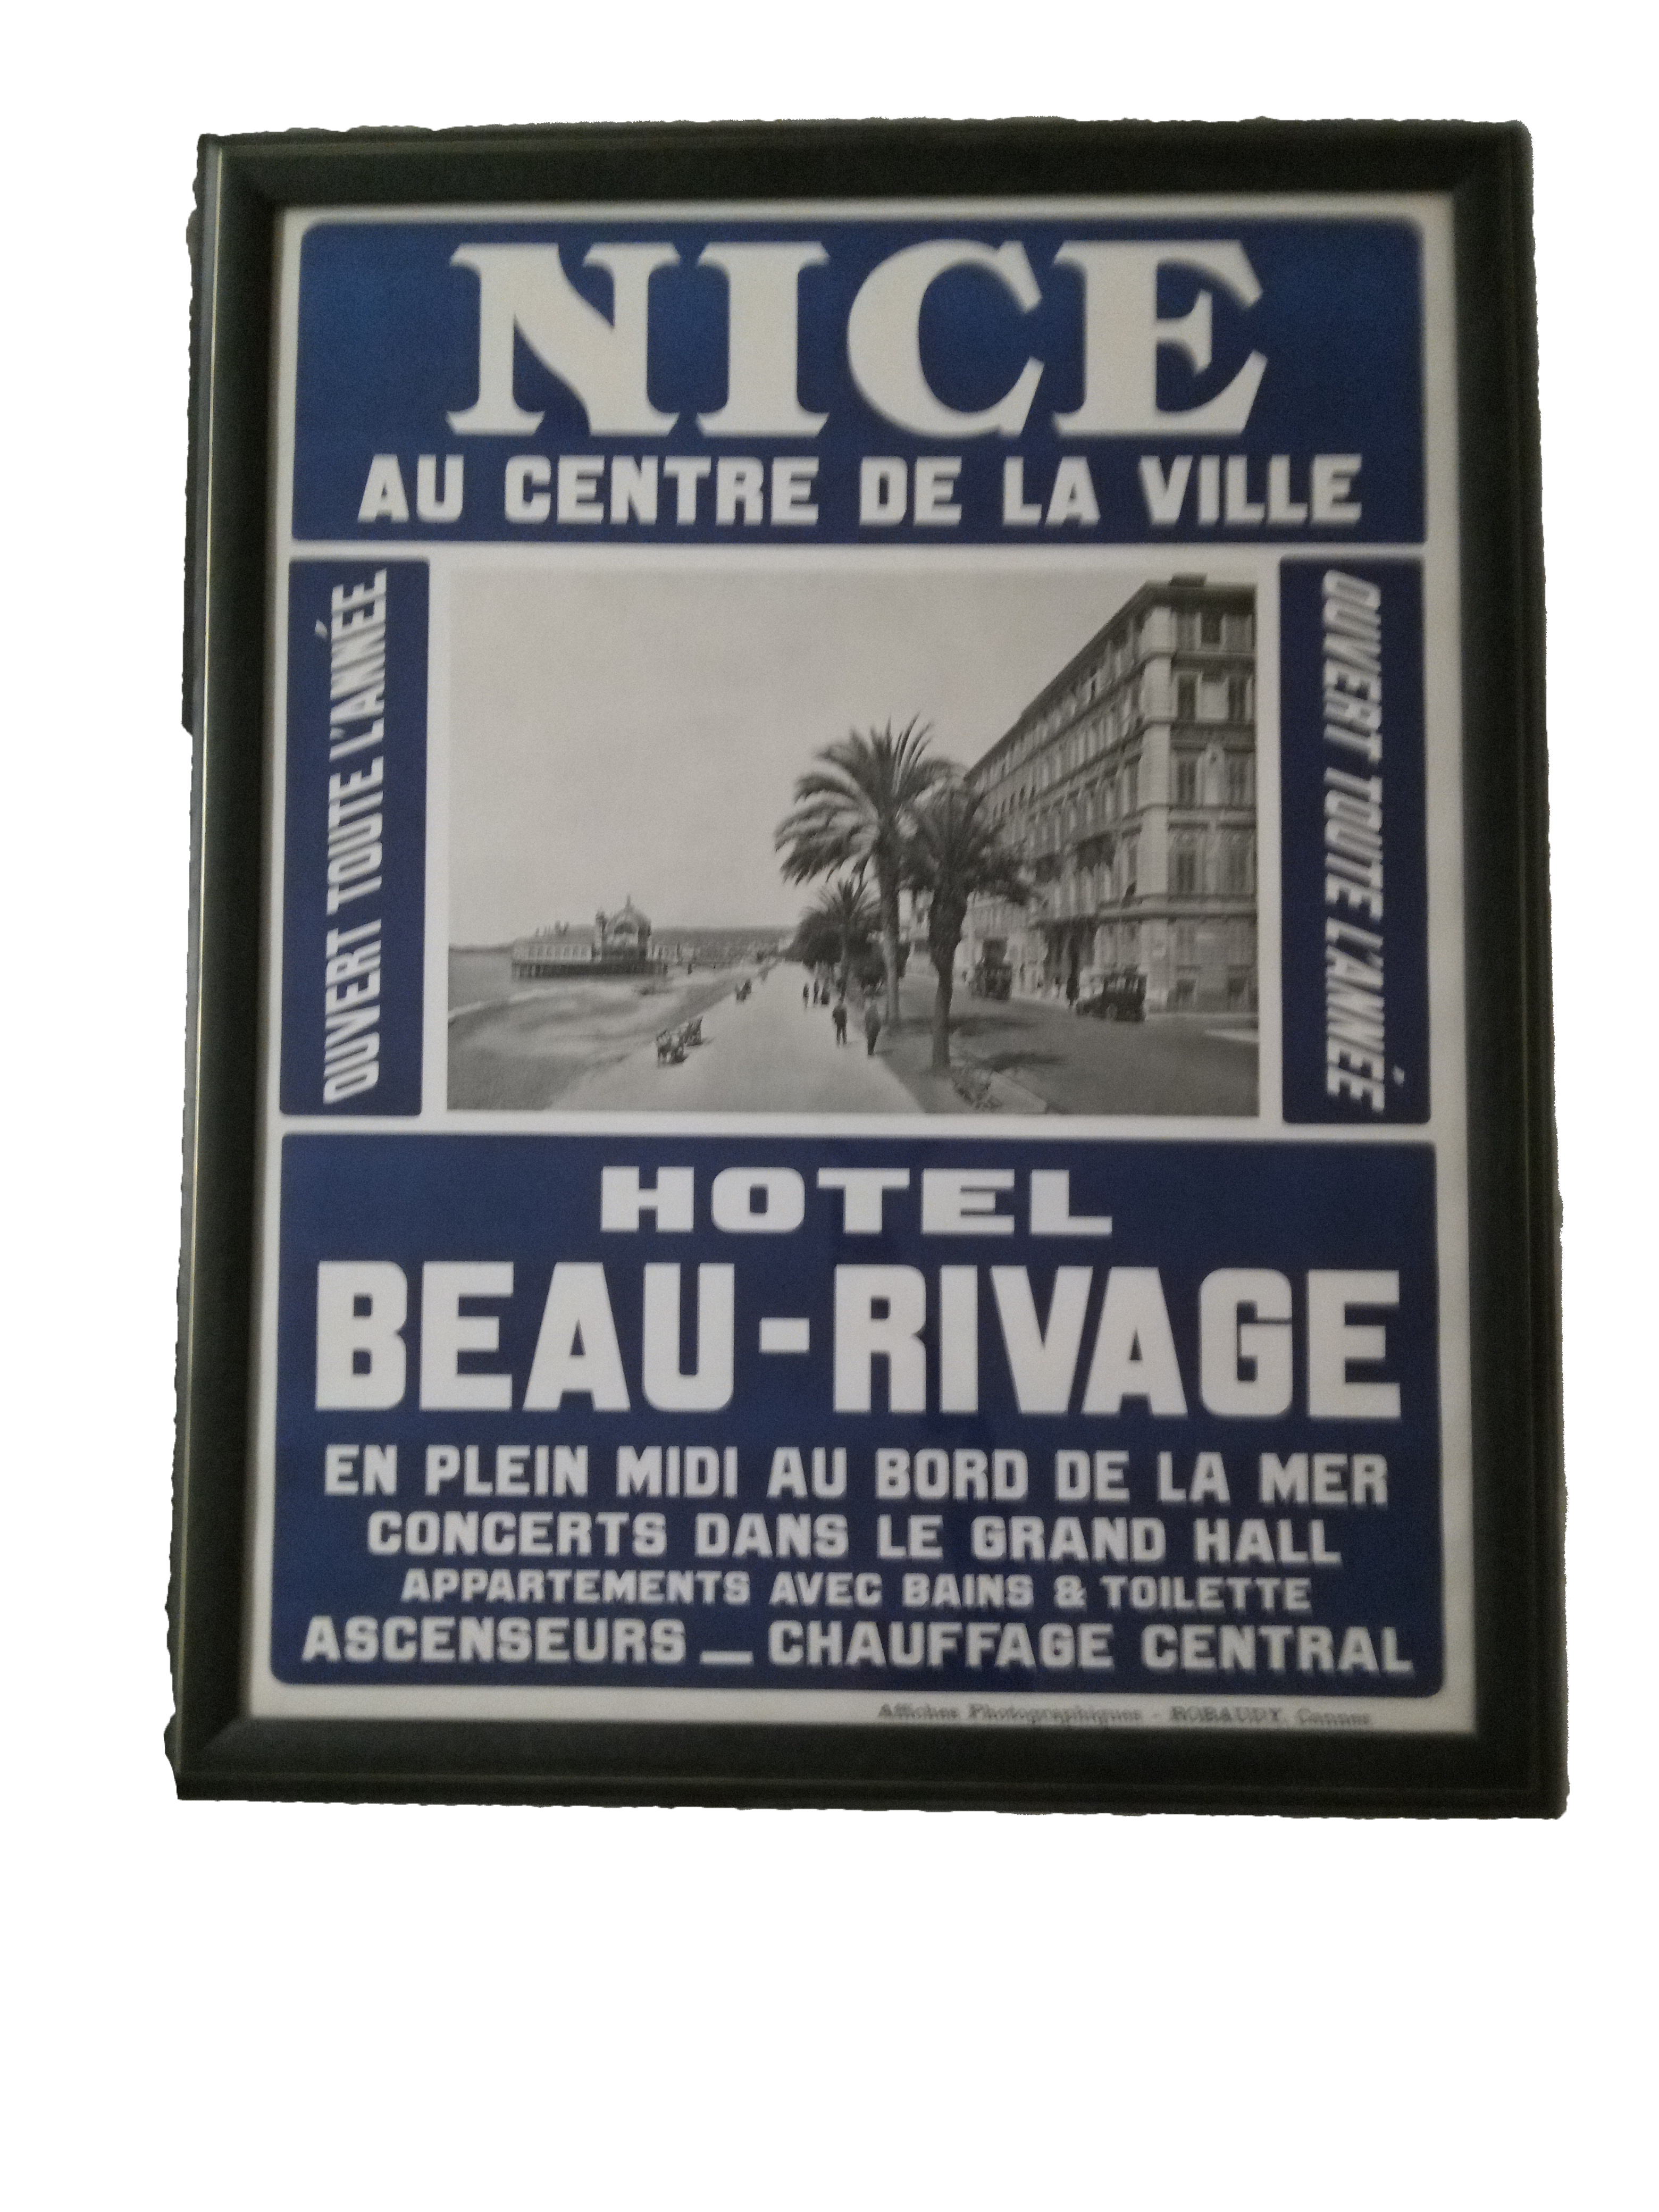 Framed - Vintage Hotel Poster Art Adverstisement - Nice, France, Hotel Beau-Rivage